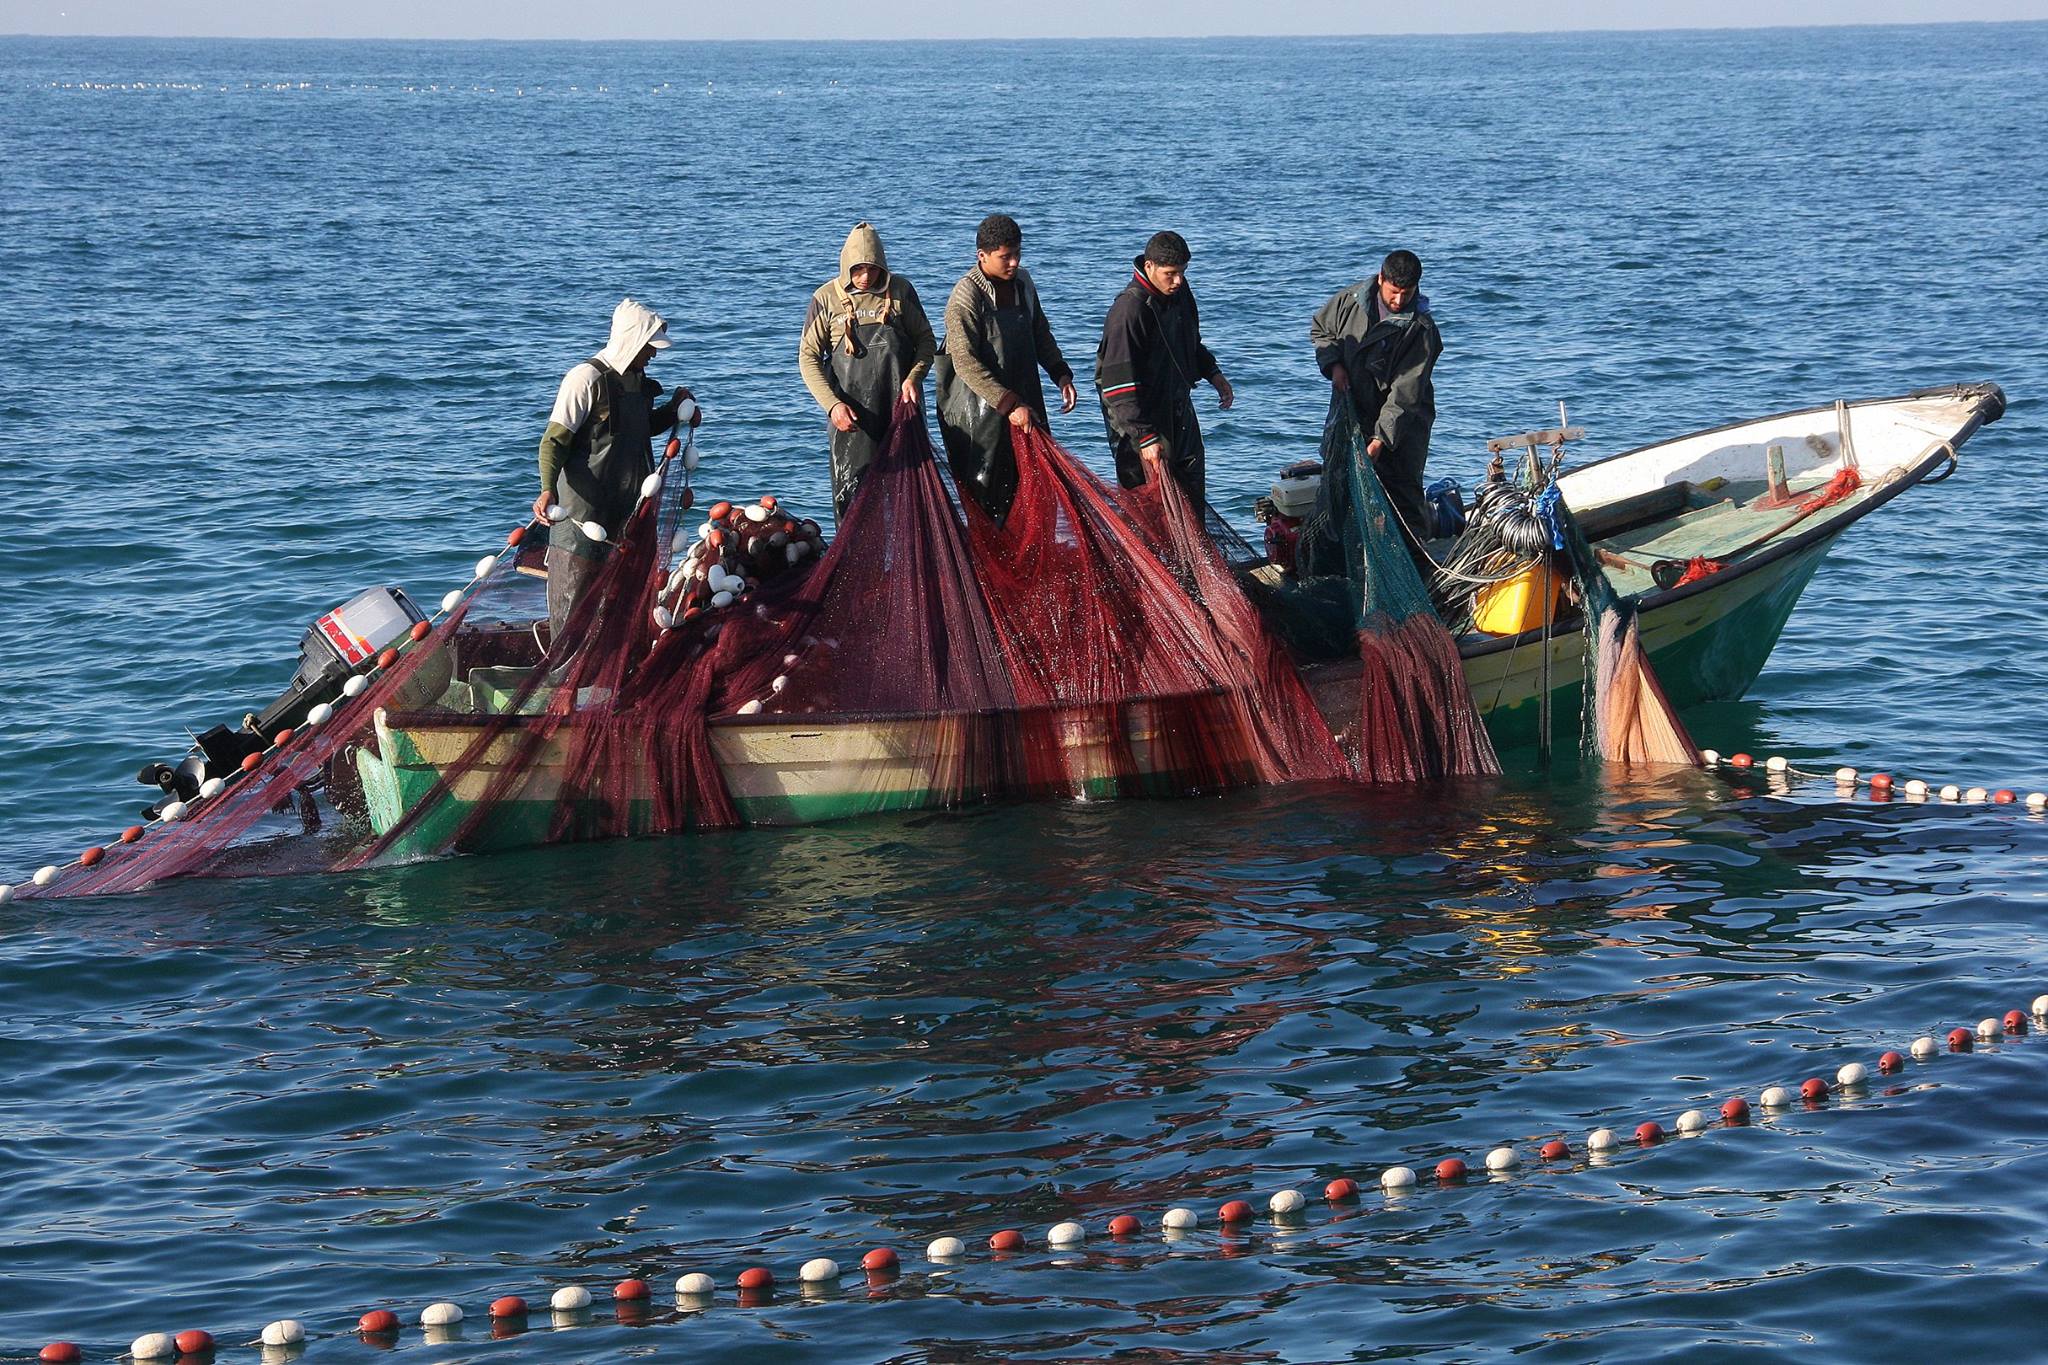 Gaza fishermen work with nets